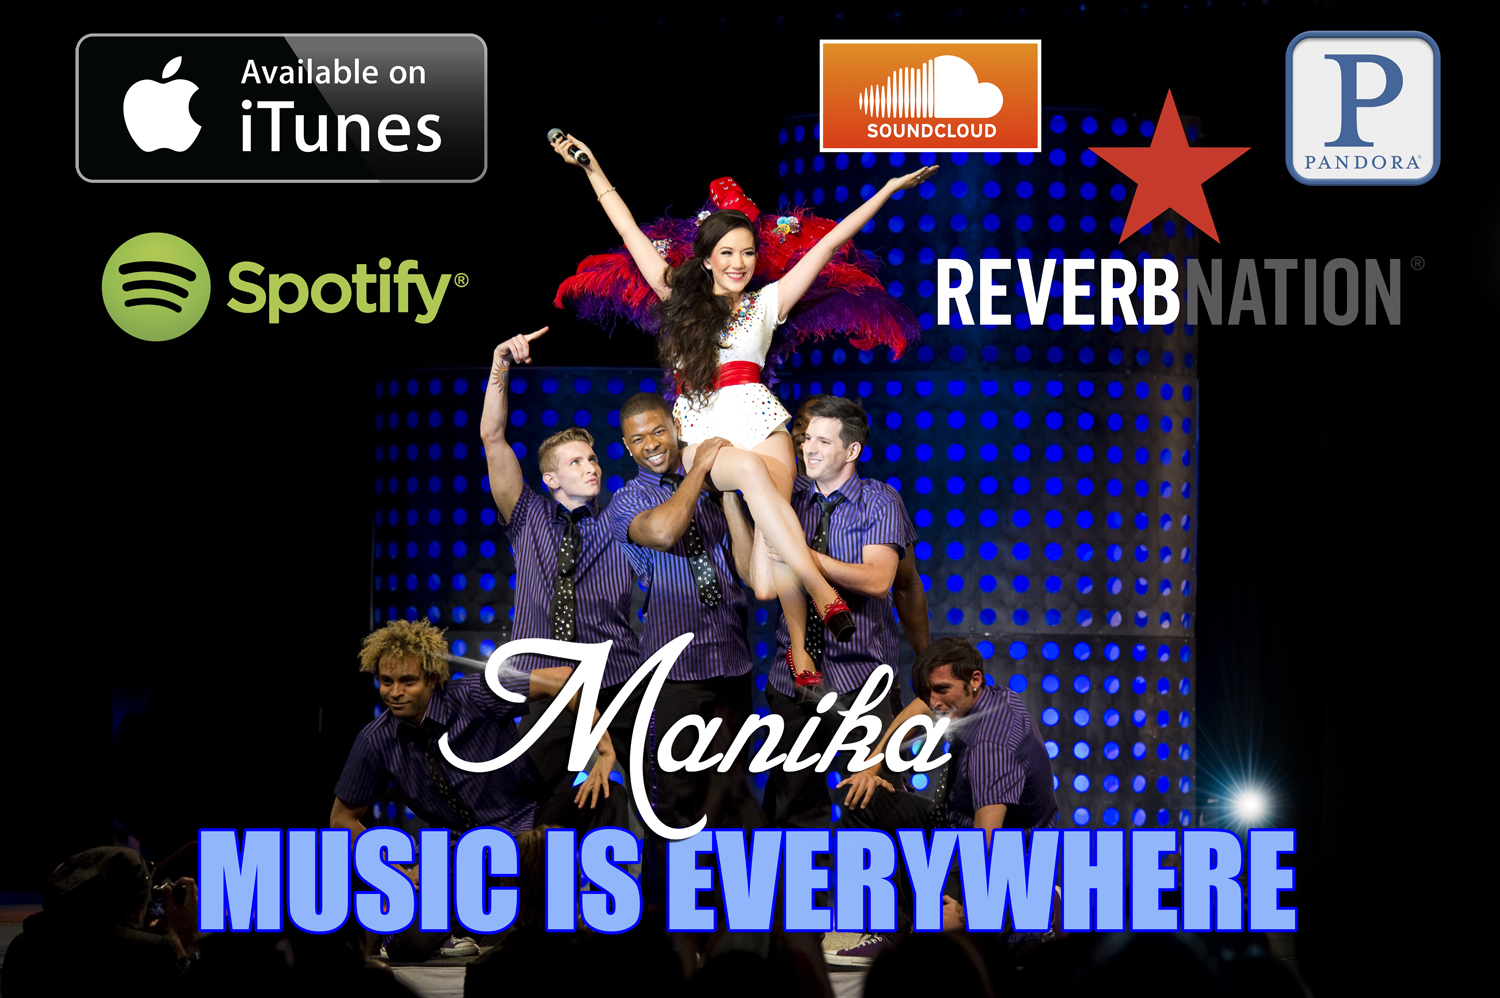 Follow Manika Music Everywhere!